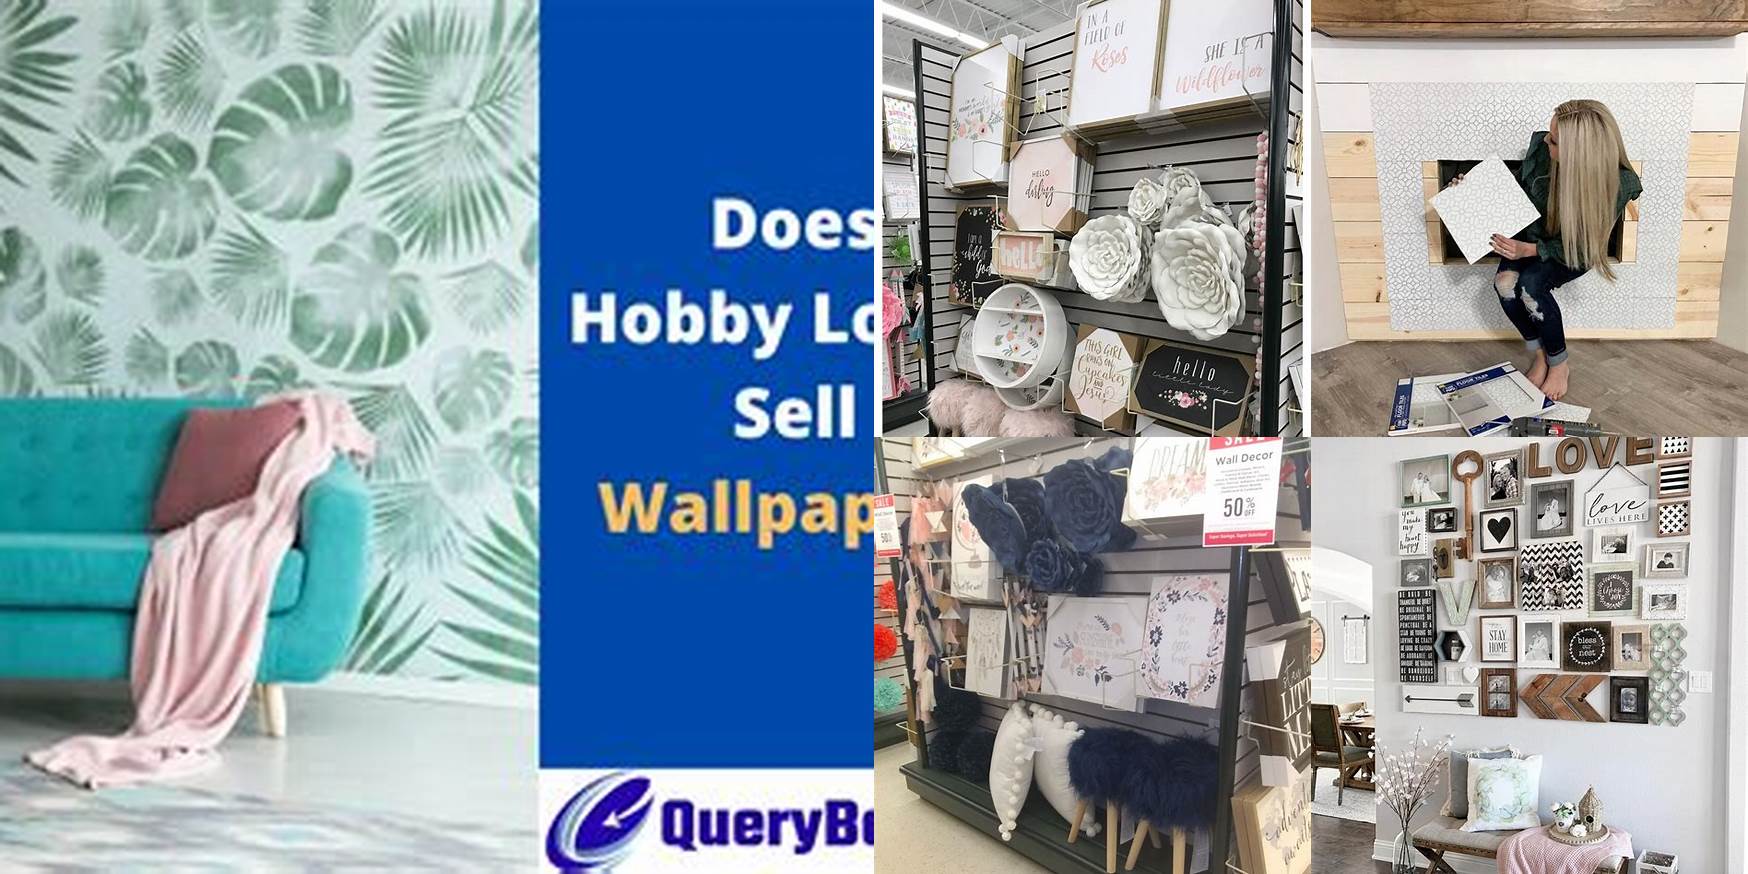 Does Hobby Lobby Sell Wallpaper